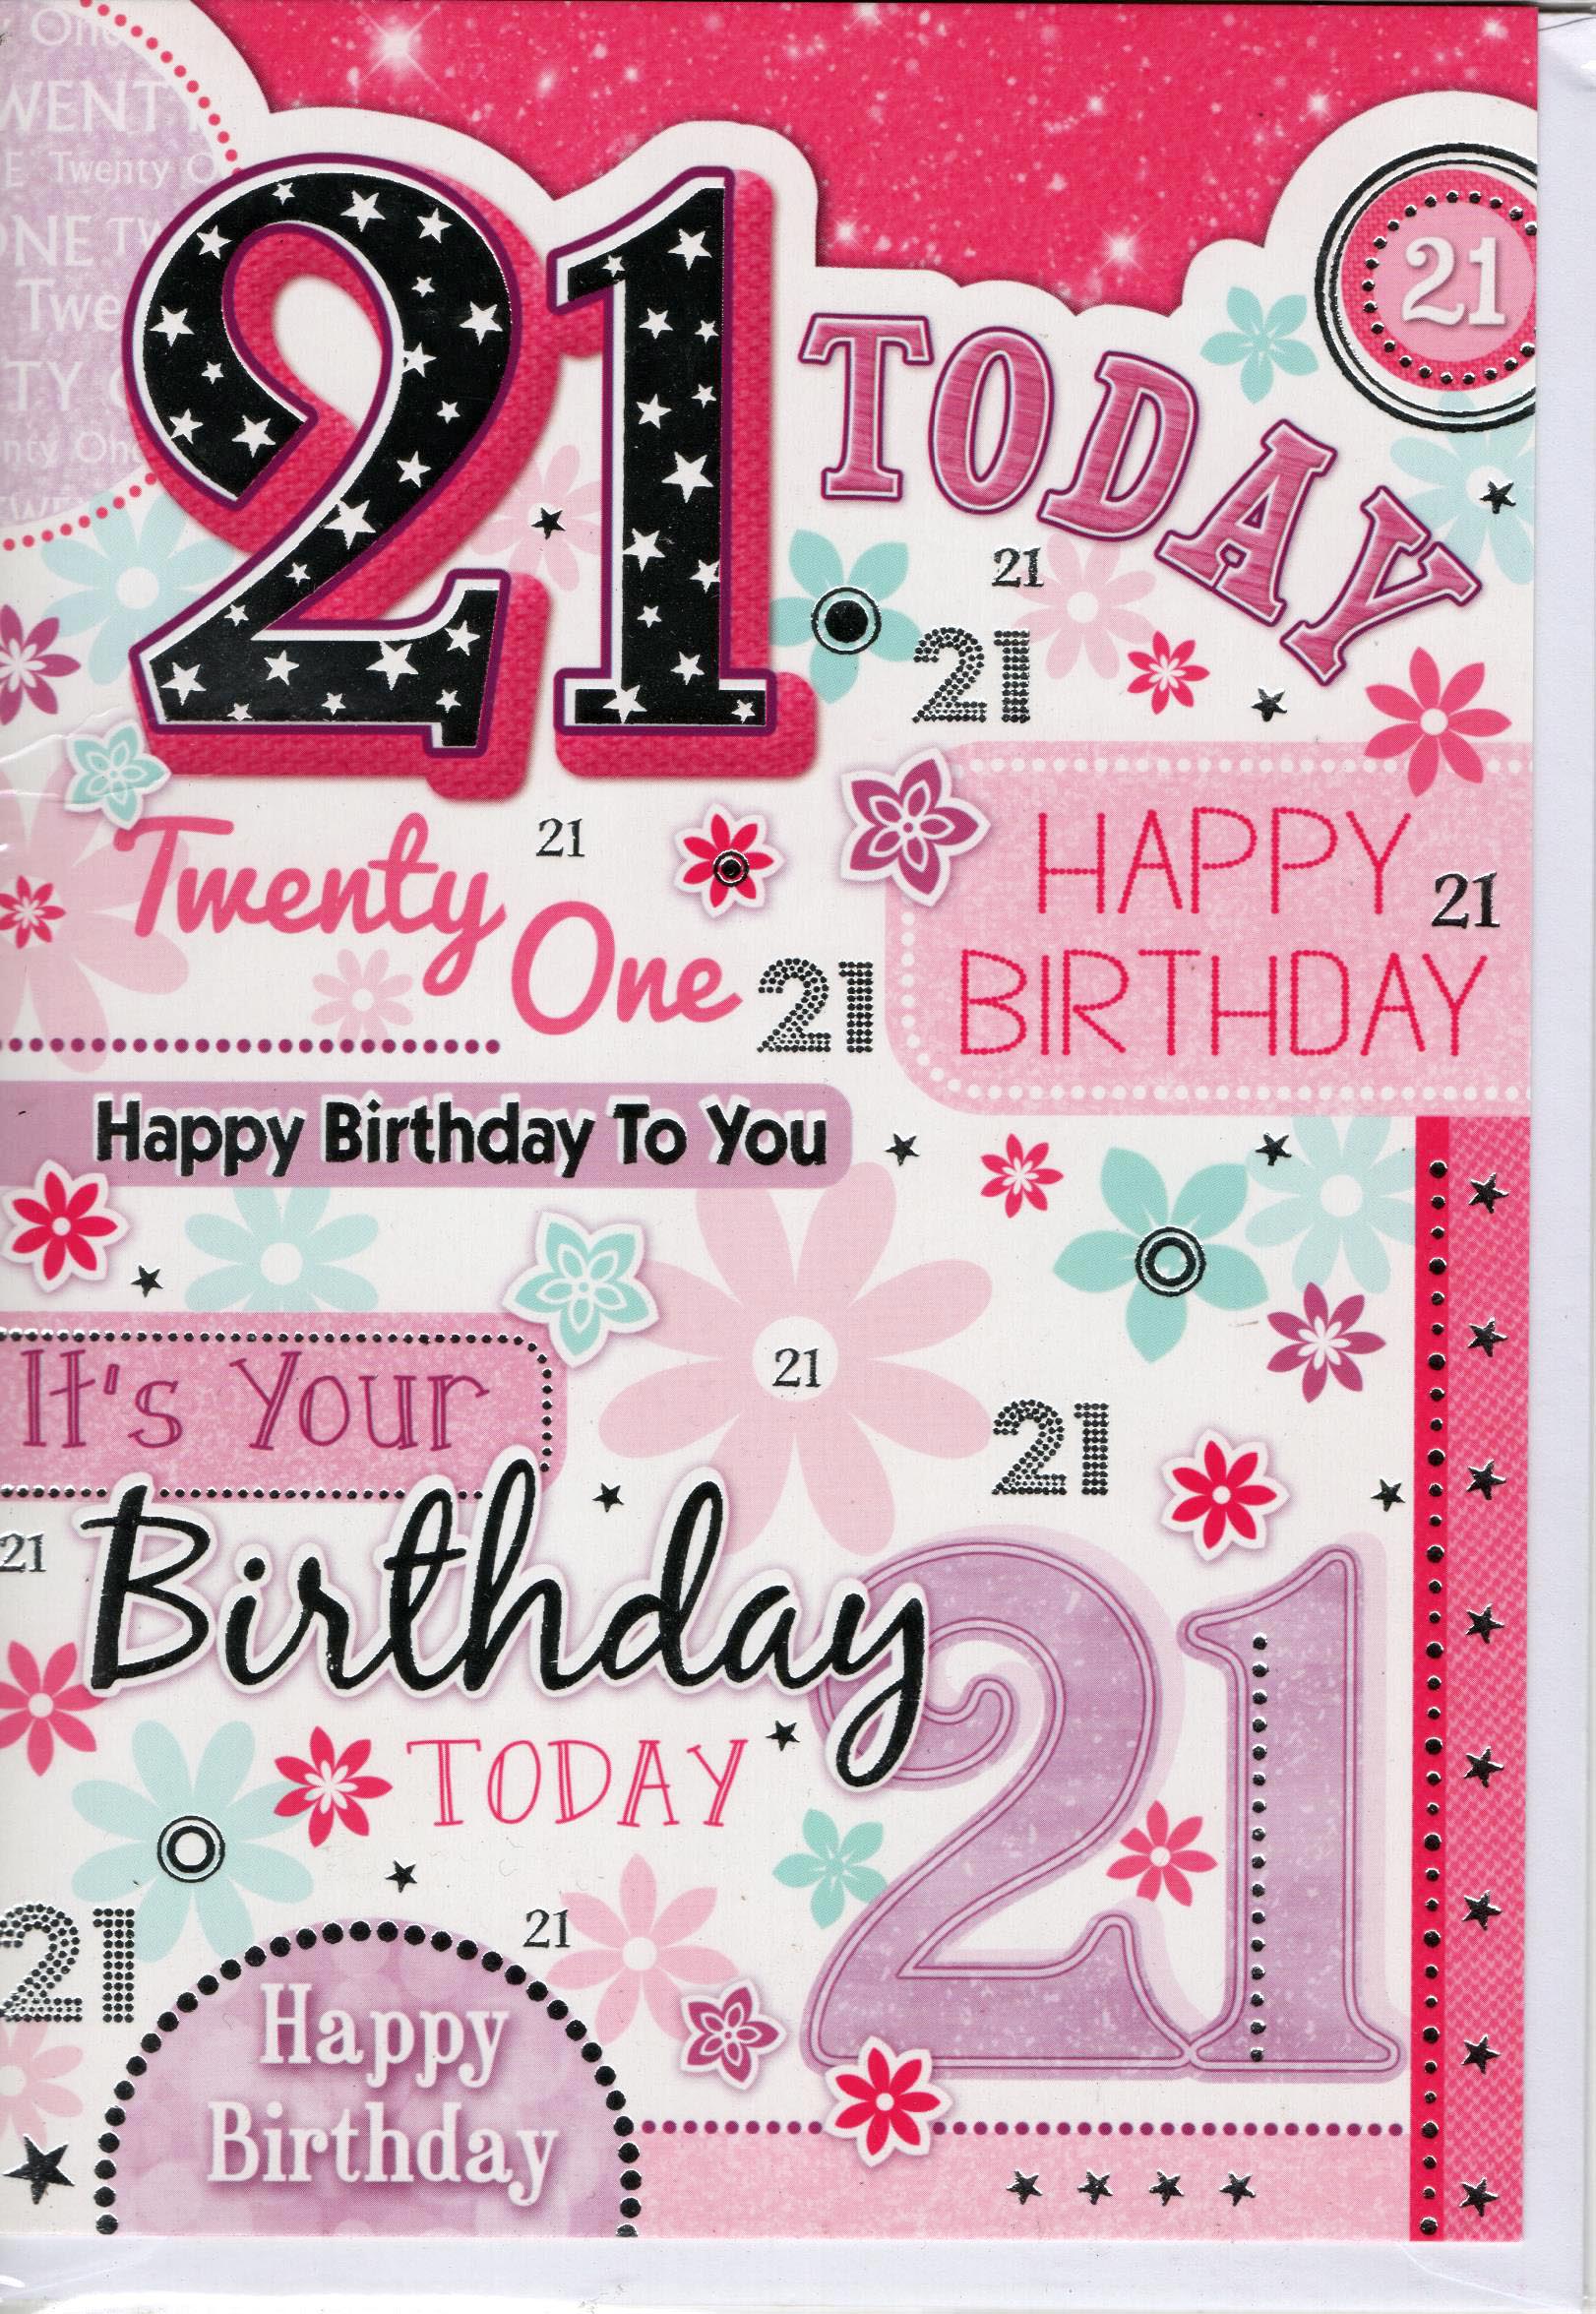 21 Today Happy Birthday Greeting Card